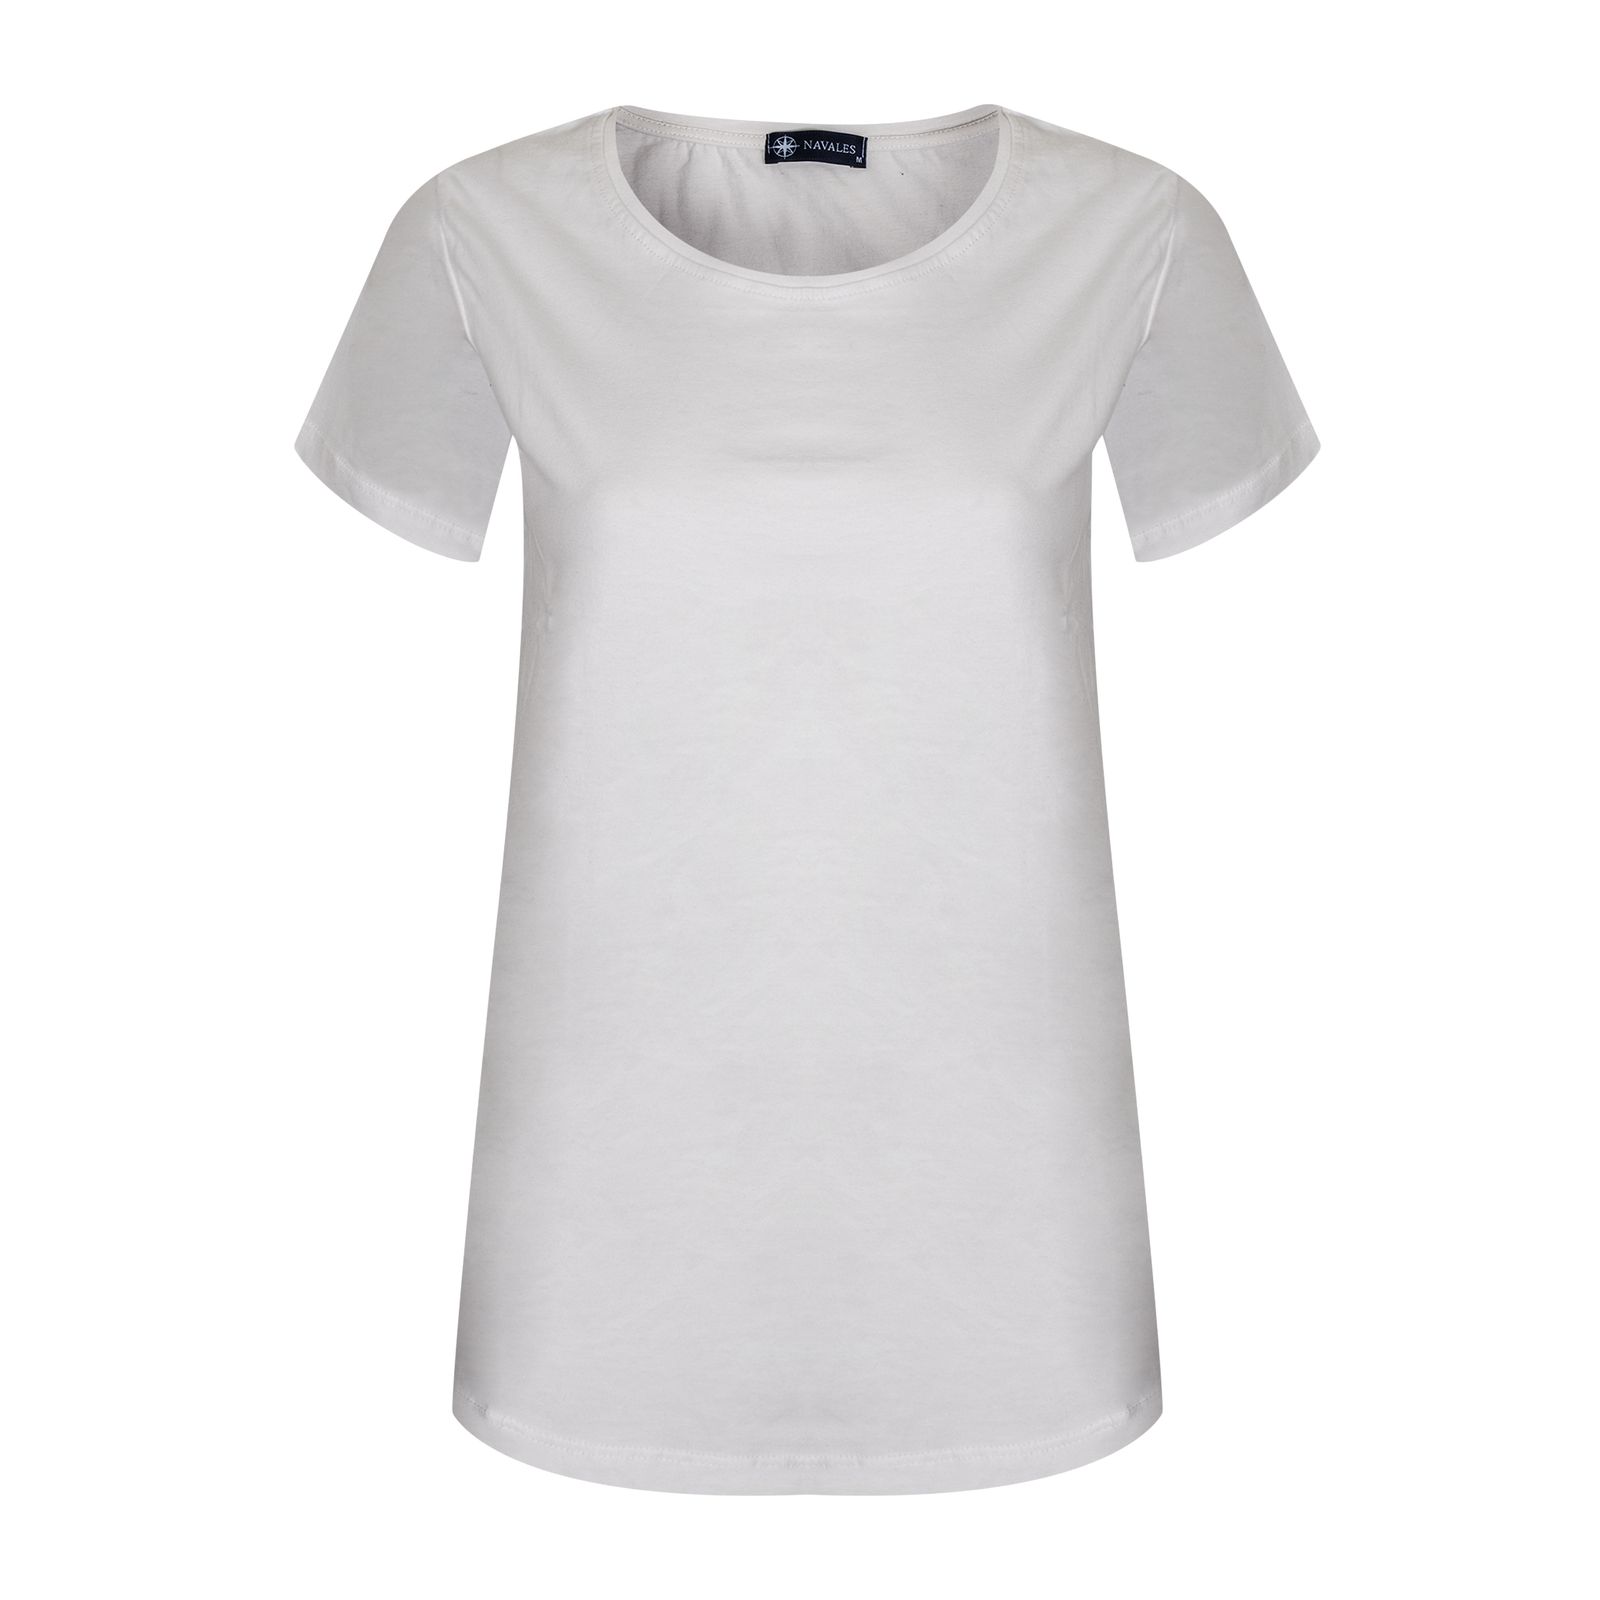 تی شرت آستین کوتاه زنانه ناوالس مدل OCEAN SS TEES-W رنگ سفید -  - 1